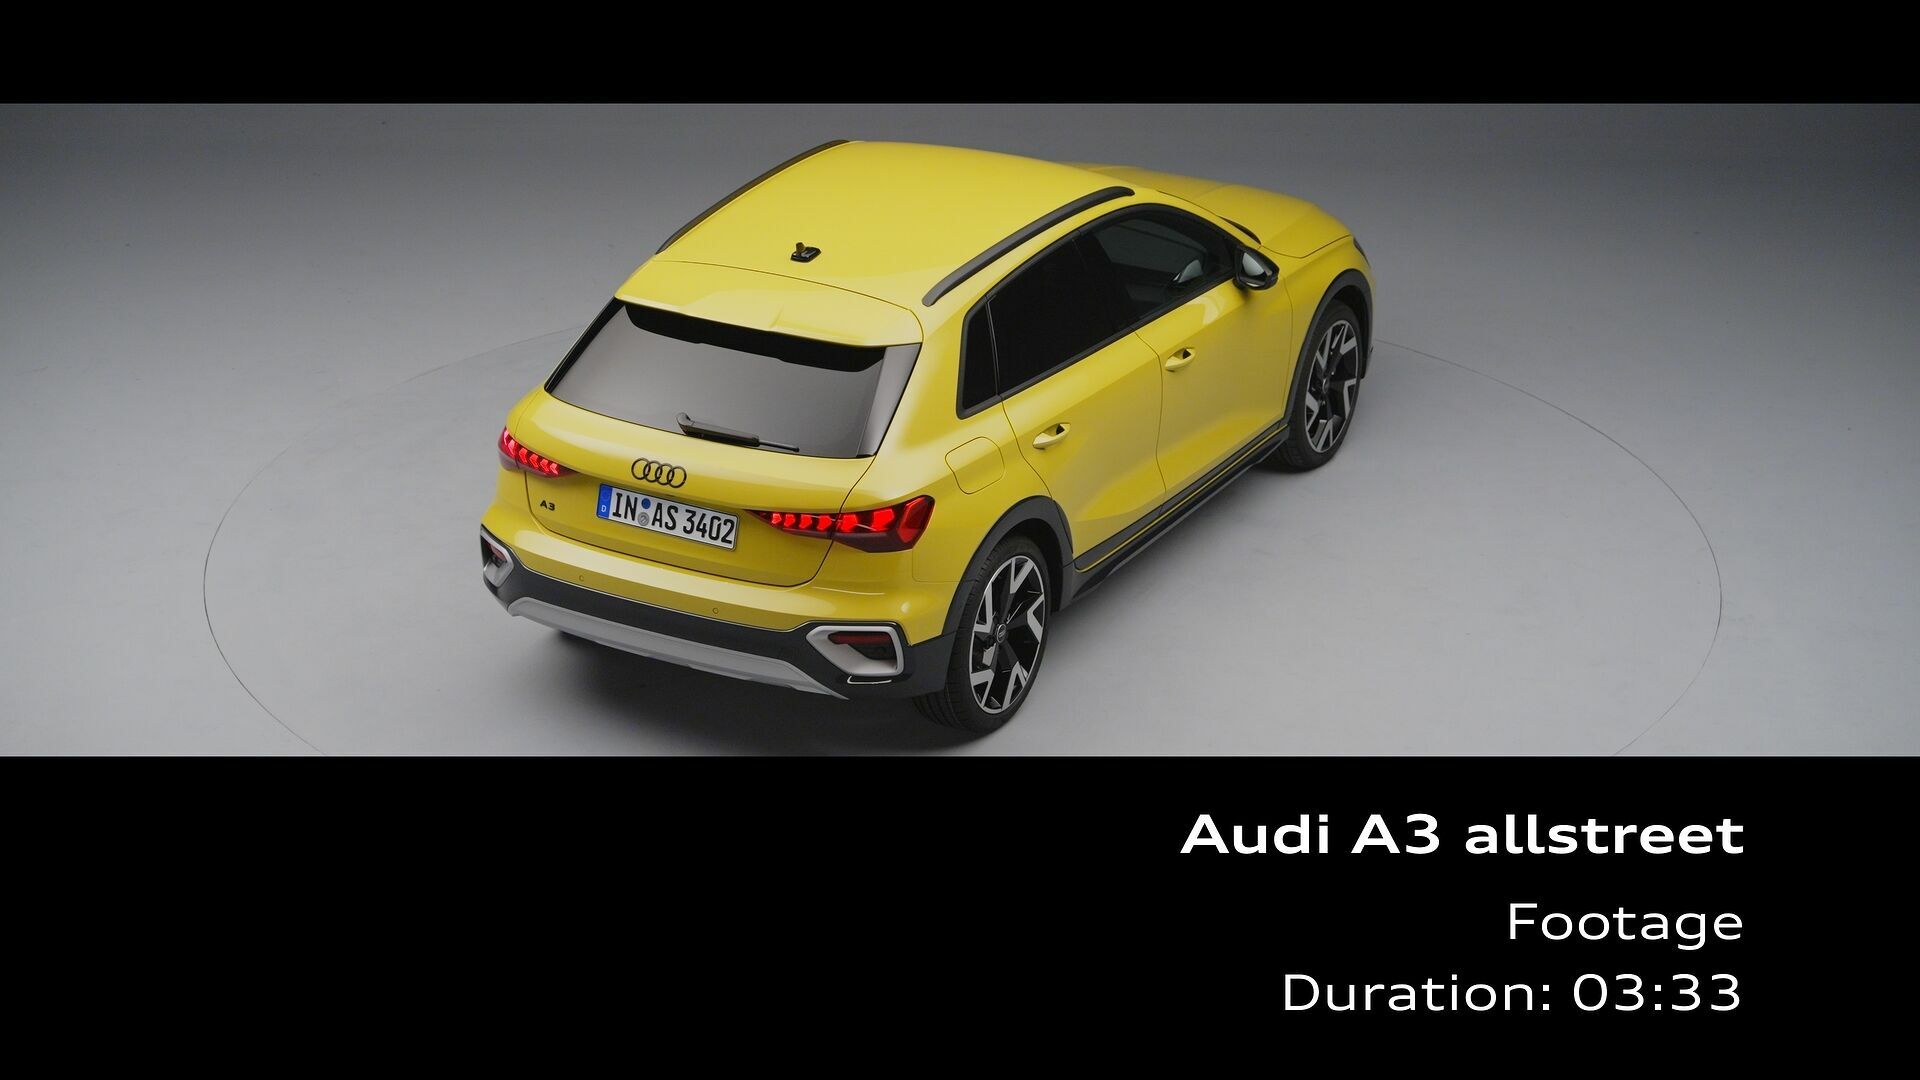 Audi A3 allstreet – Footage (Studio)